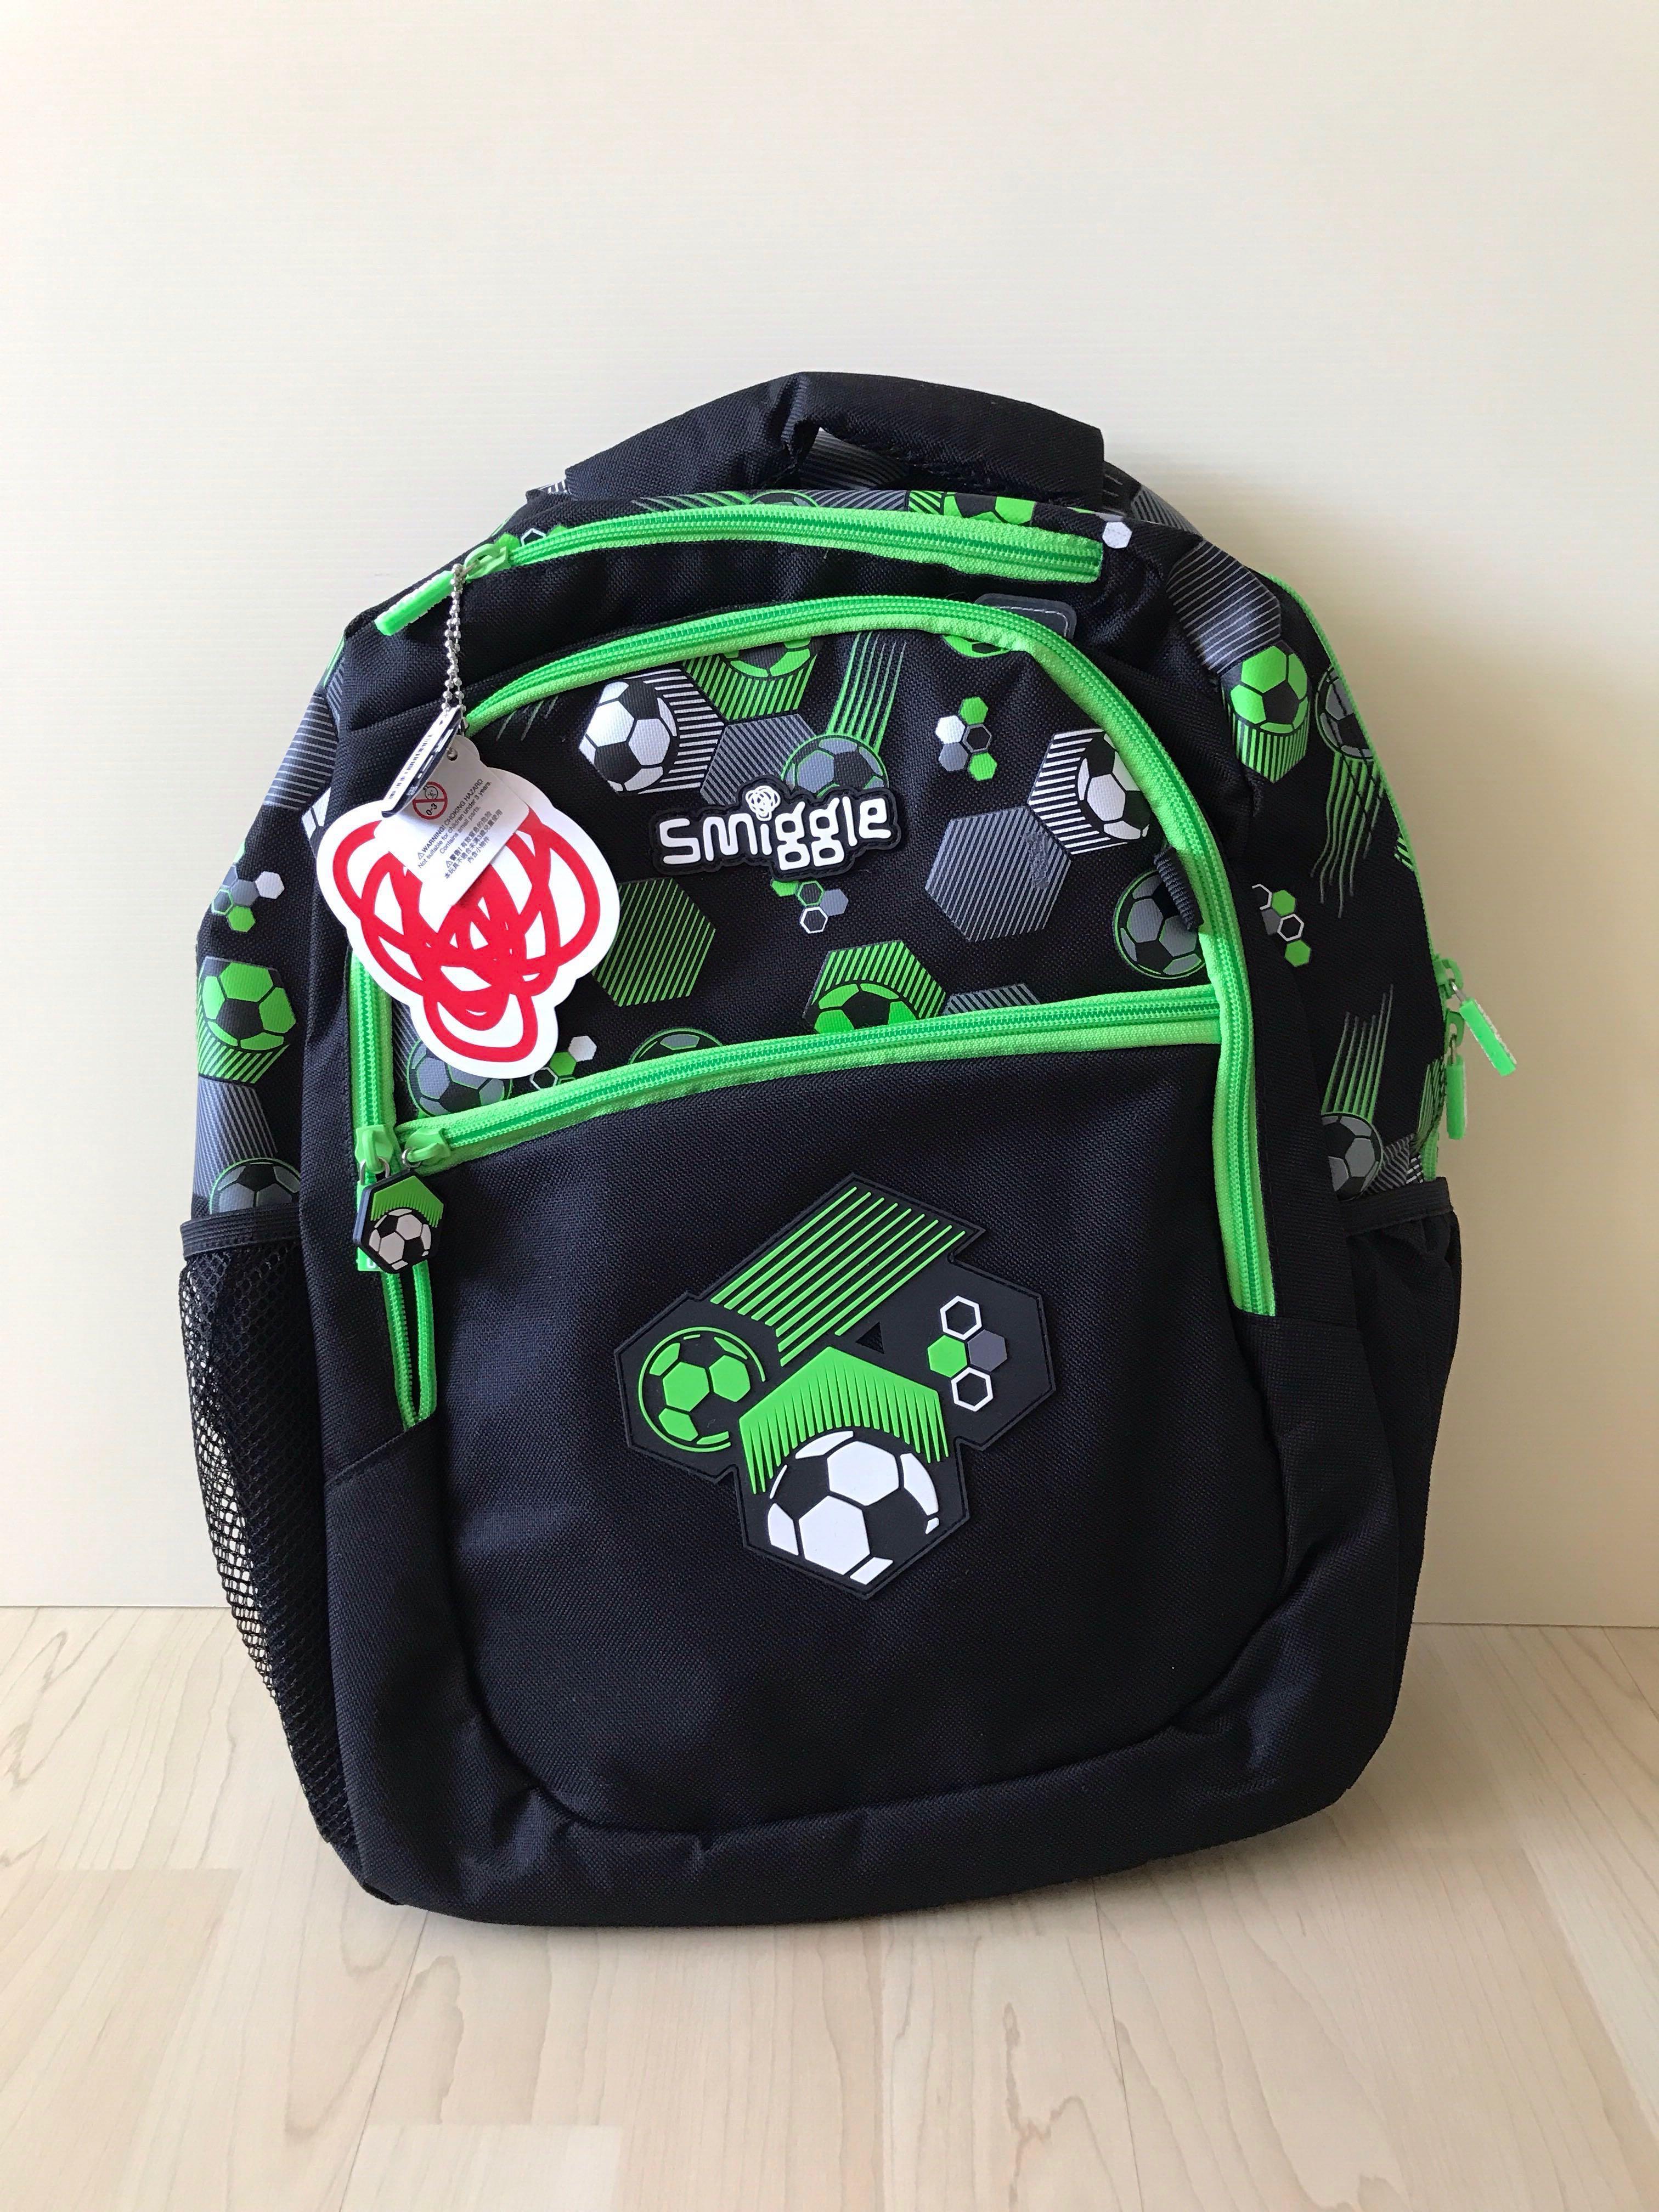 smiggle football backpack